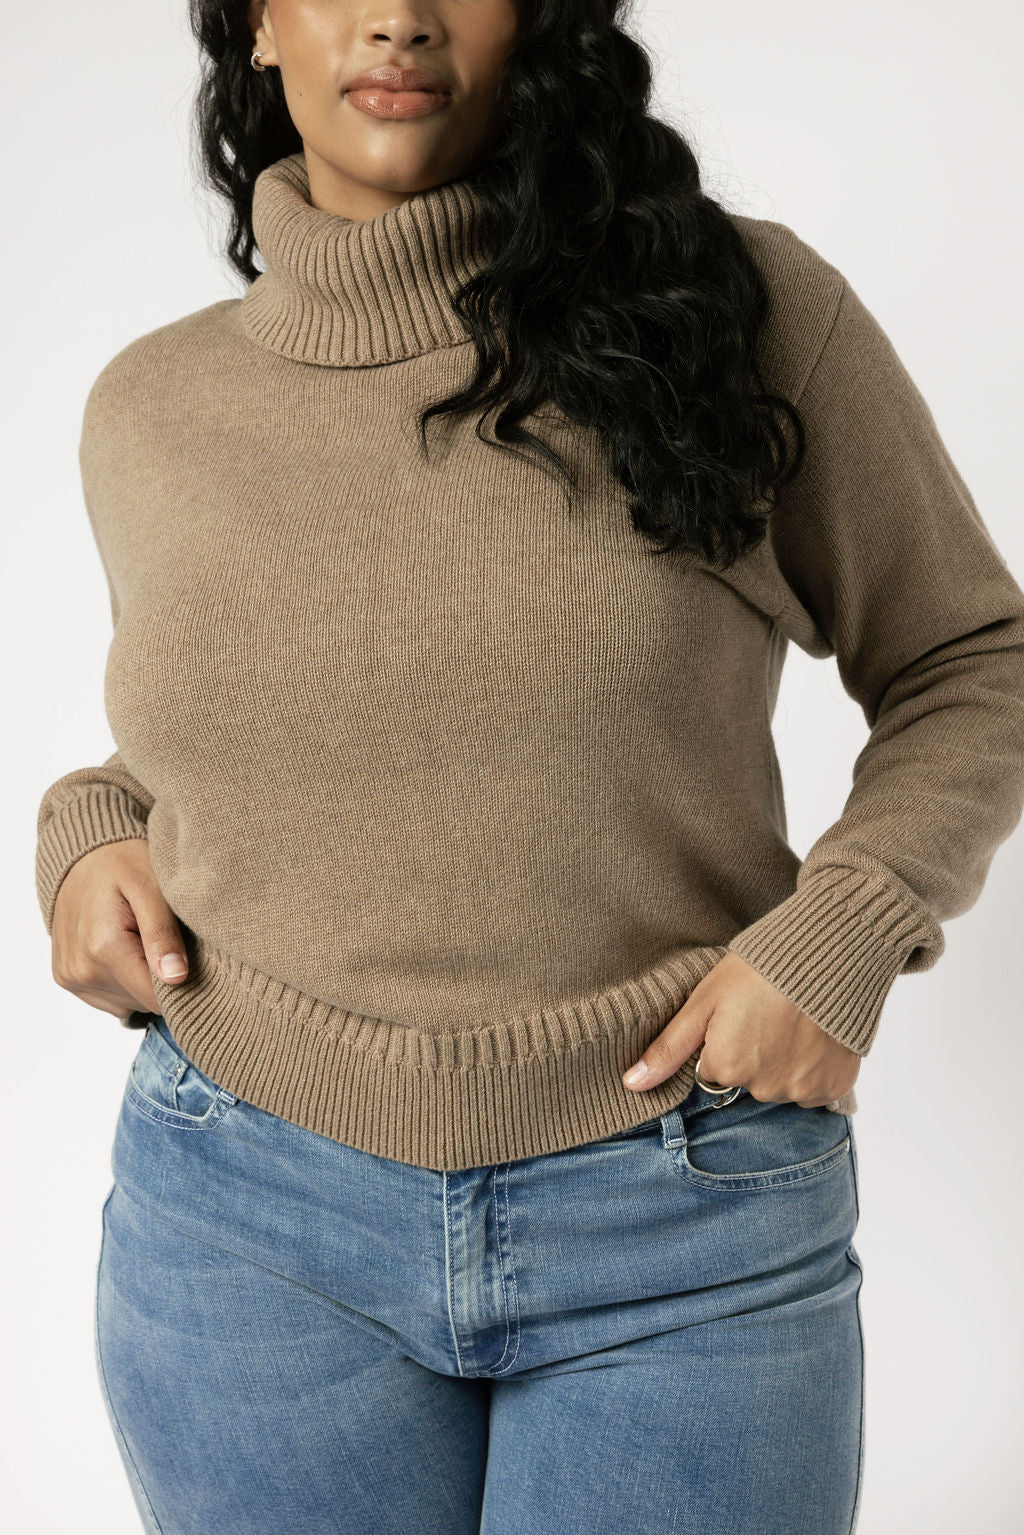 Minimalist Capsule Wardrobe 100% Organic Cotton Cozy Brown Cowl Neck Sweater